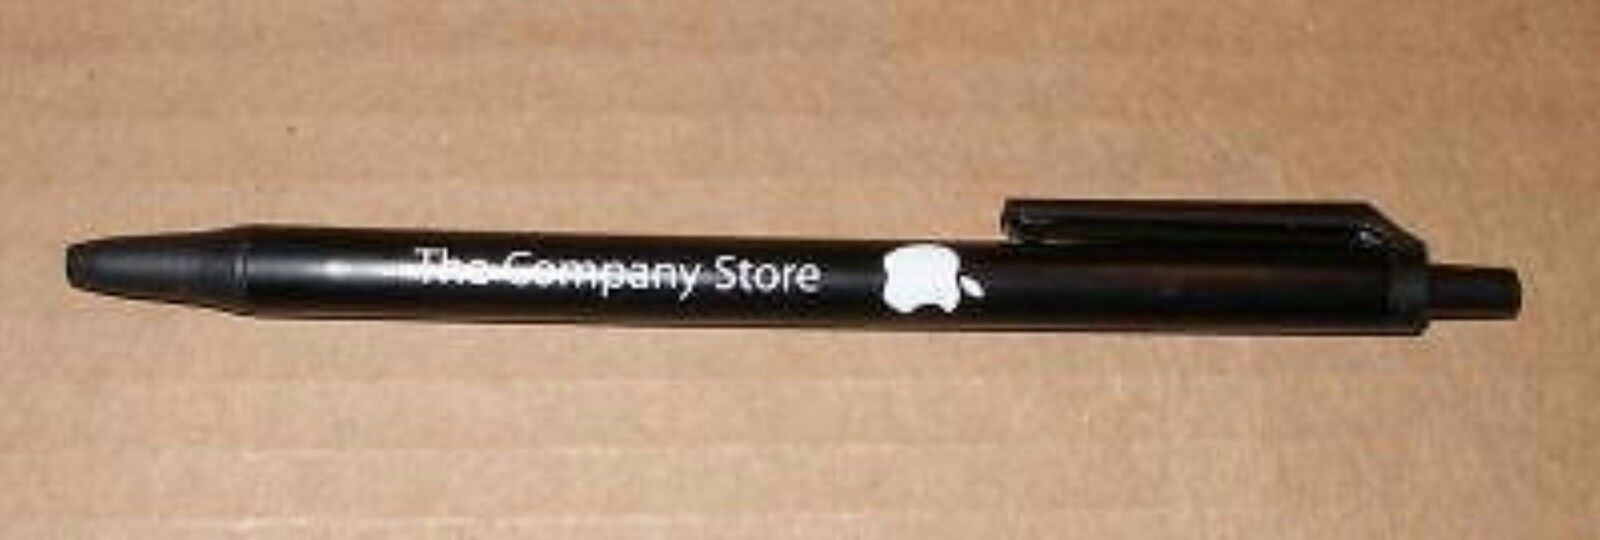 RARE Apple Computer Logo Company Store Employee Pen